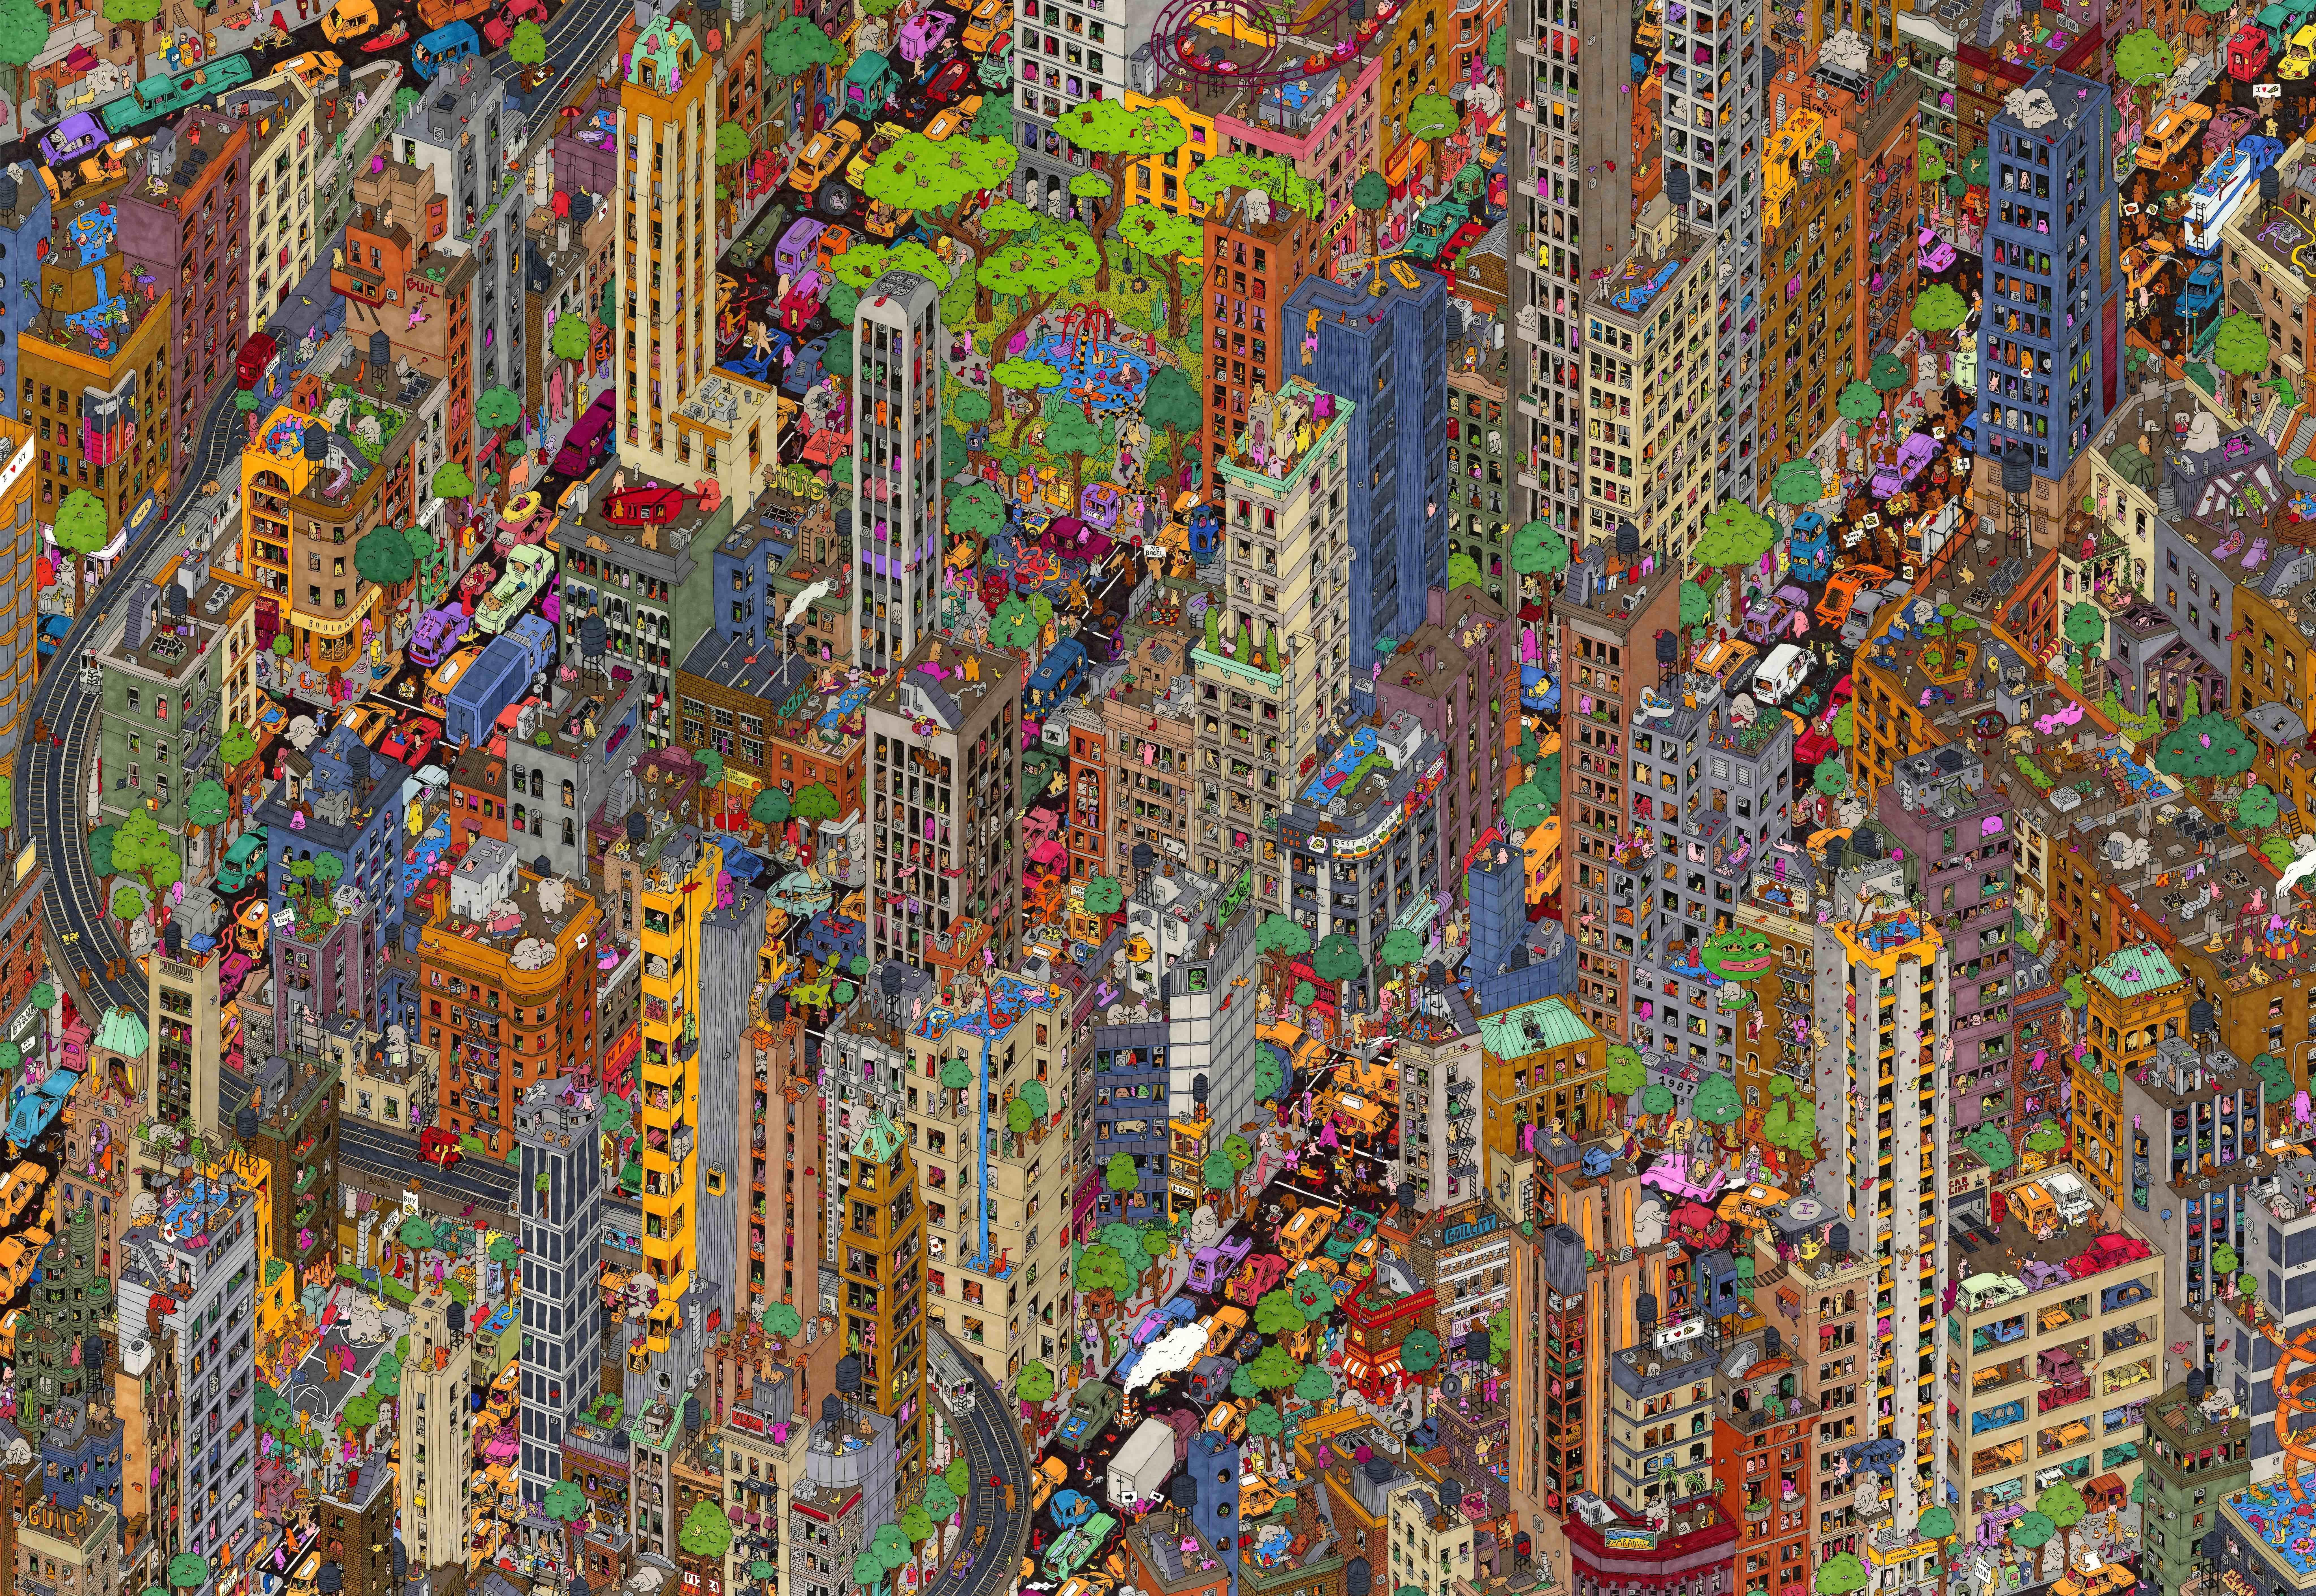 Guillaume Cornet Figurative Art - Neighborhoods - intricate hand-drawn colorful illustration of urban New York